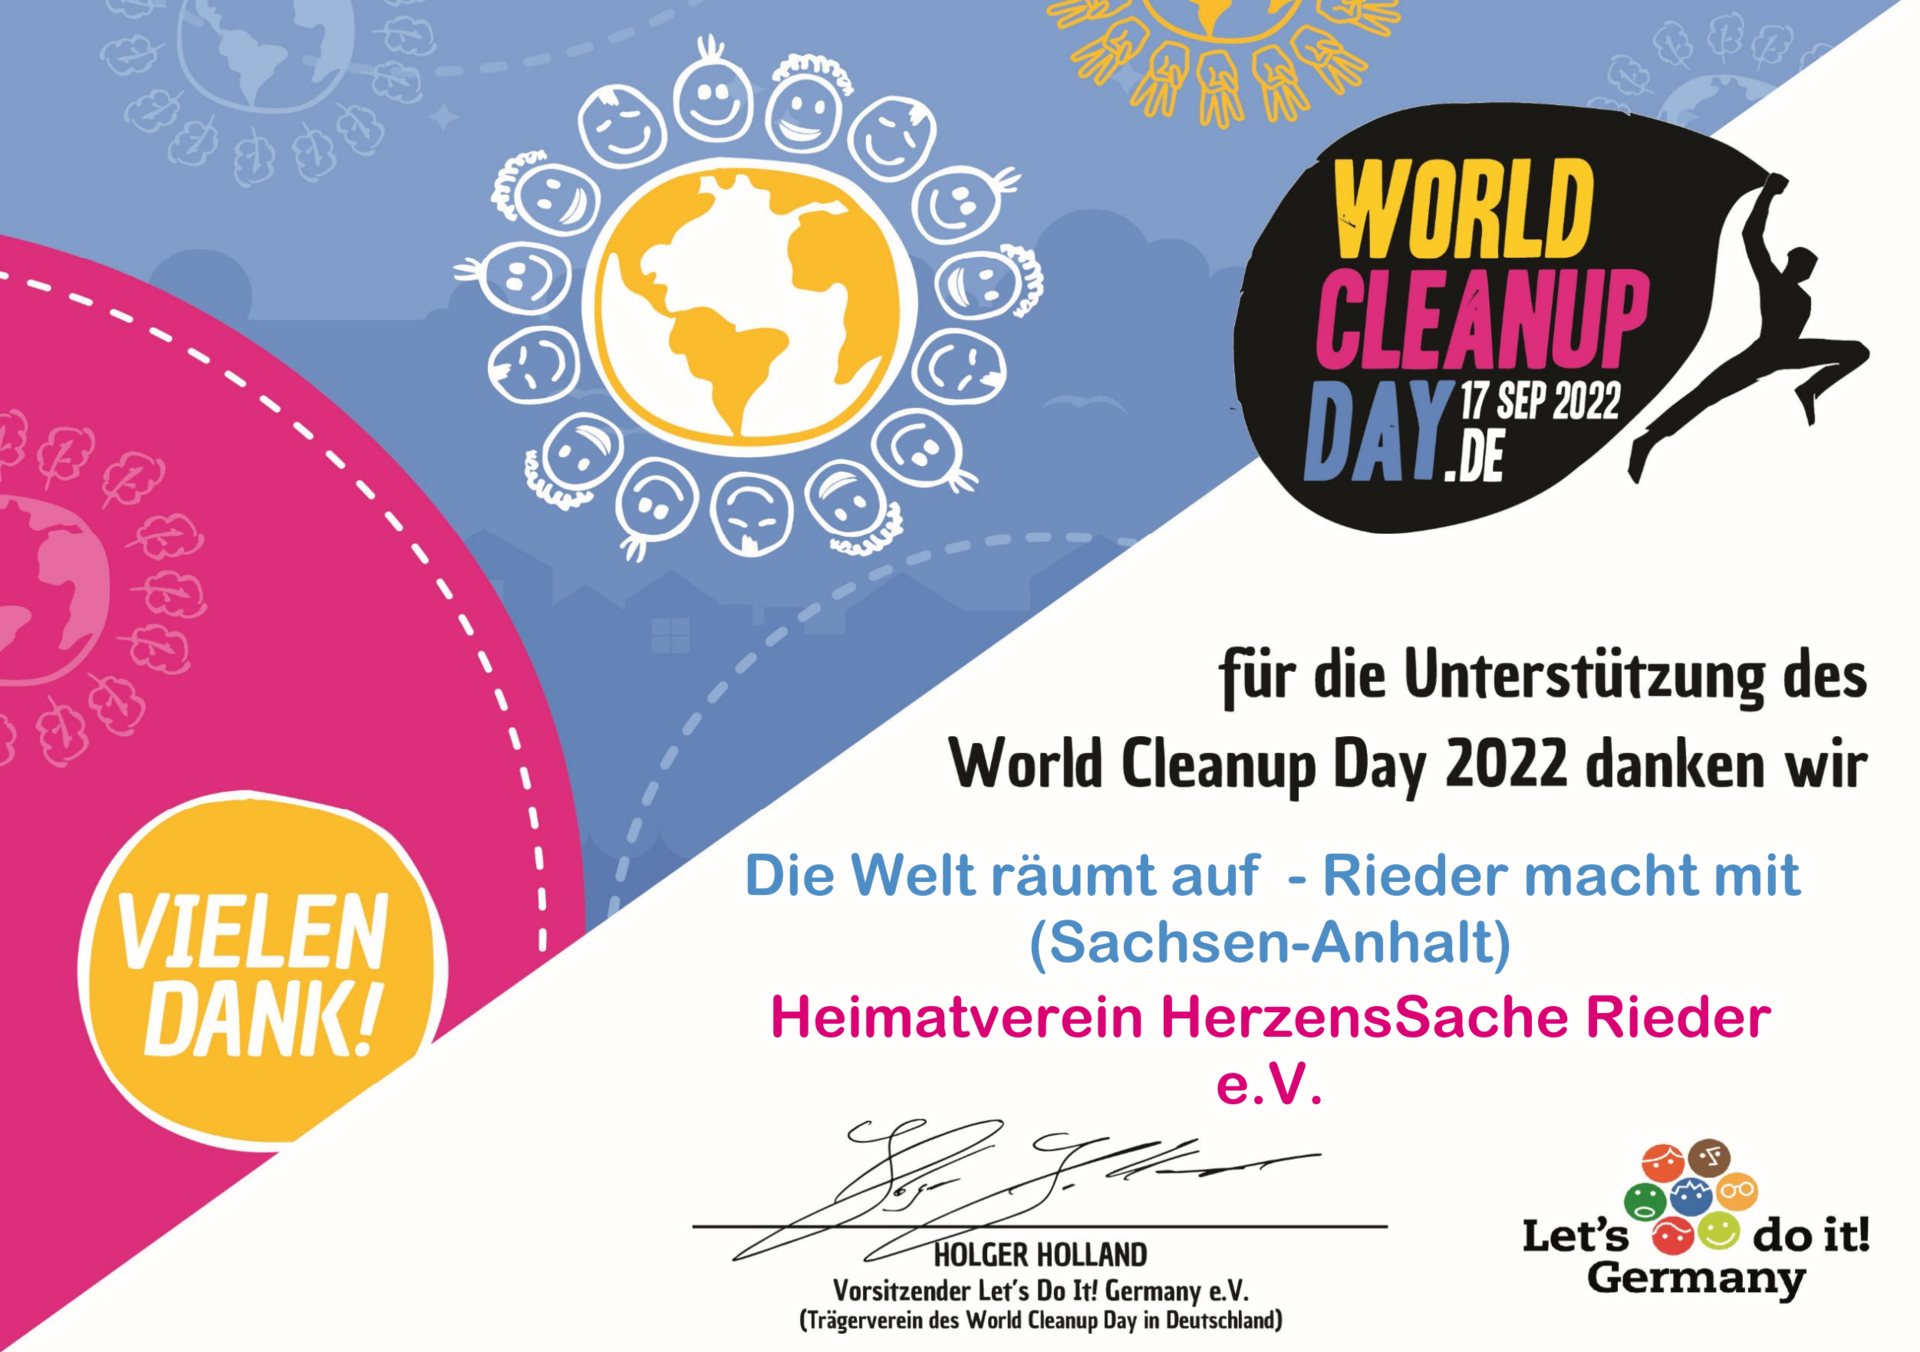 Bild: Urkunde World Cleanup Day 2022